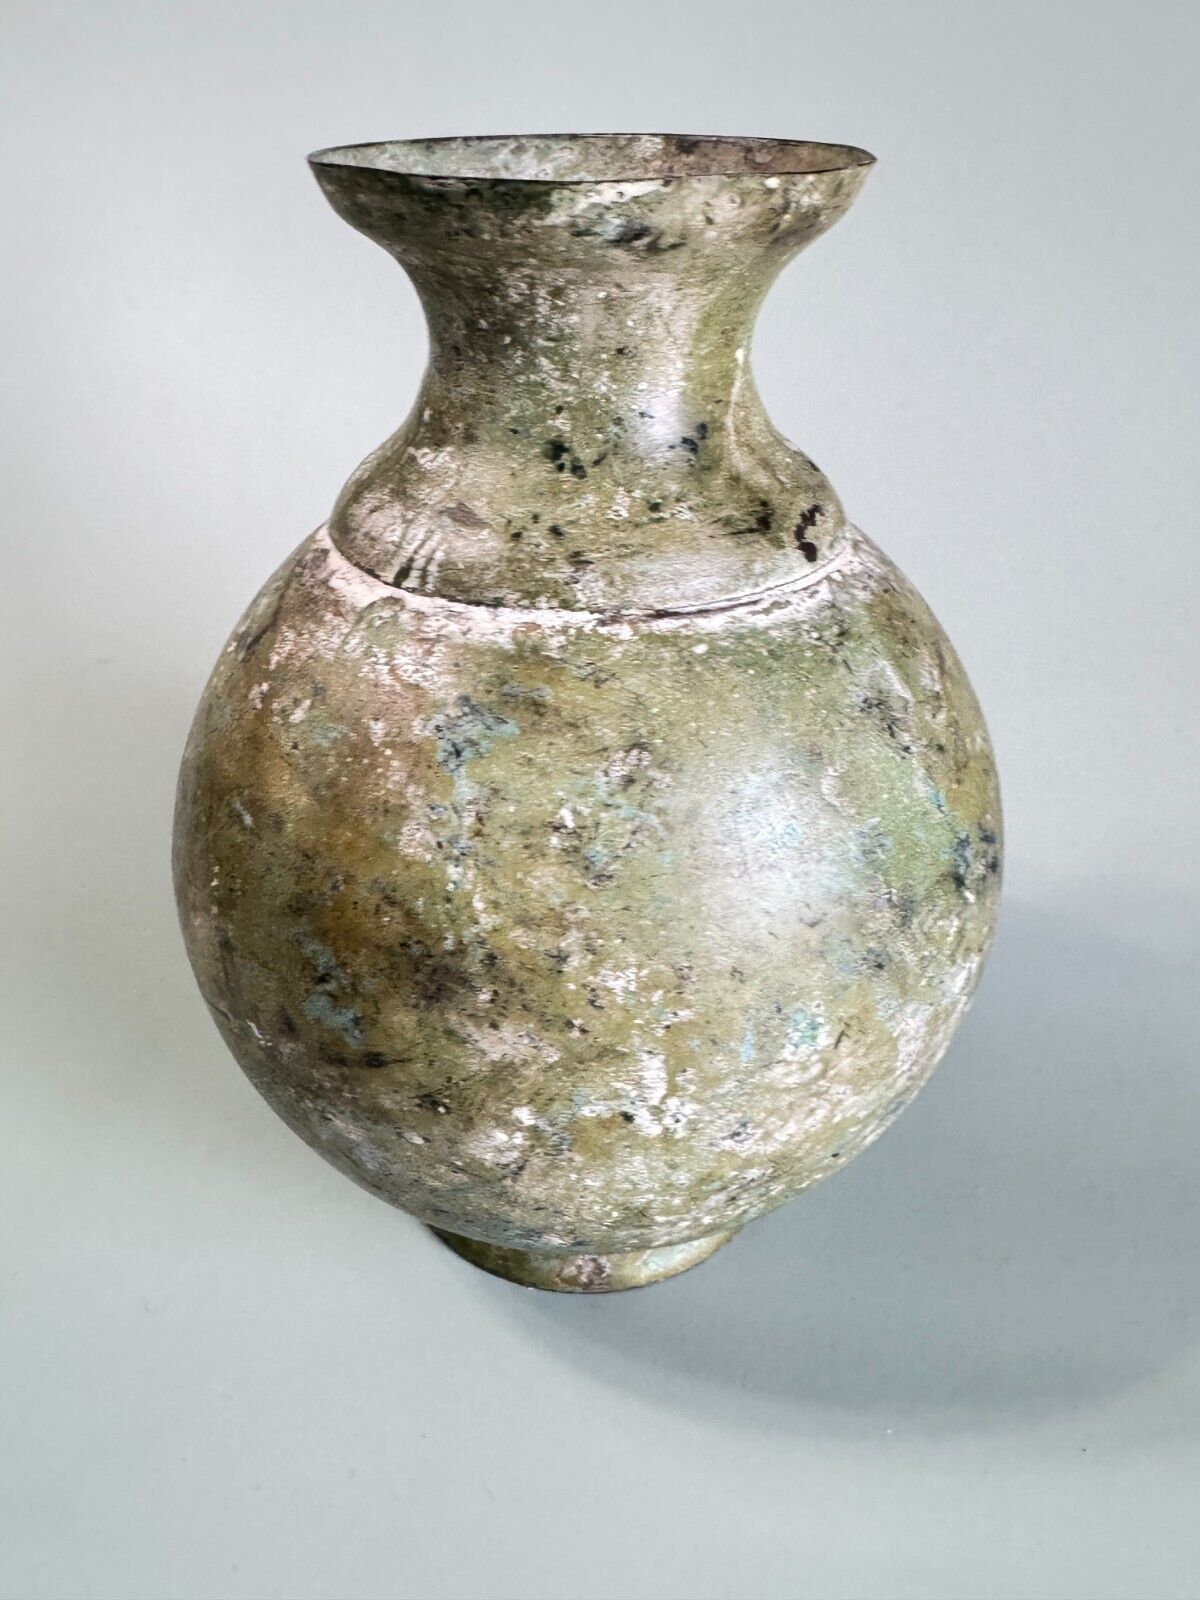 Antique Old Bronze Asian Vessel Vase Collectible Home Decor